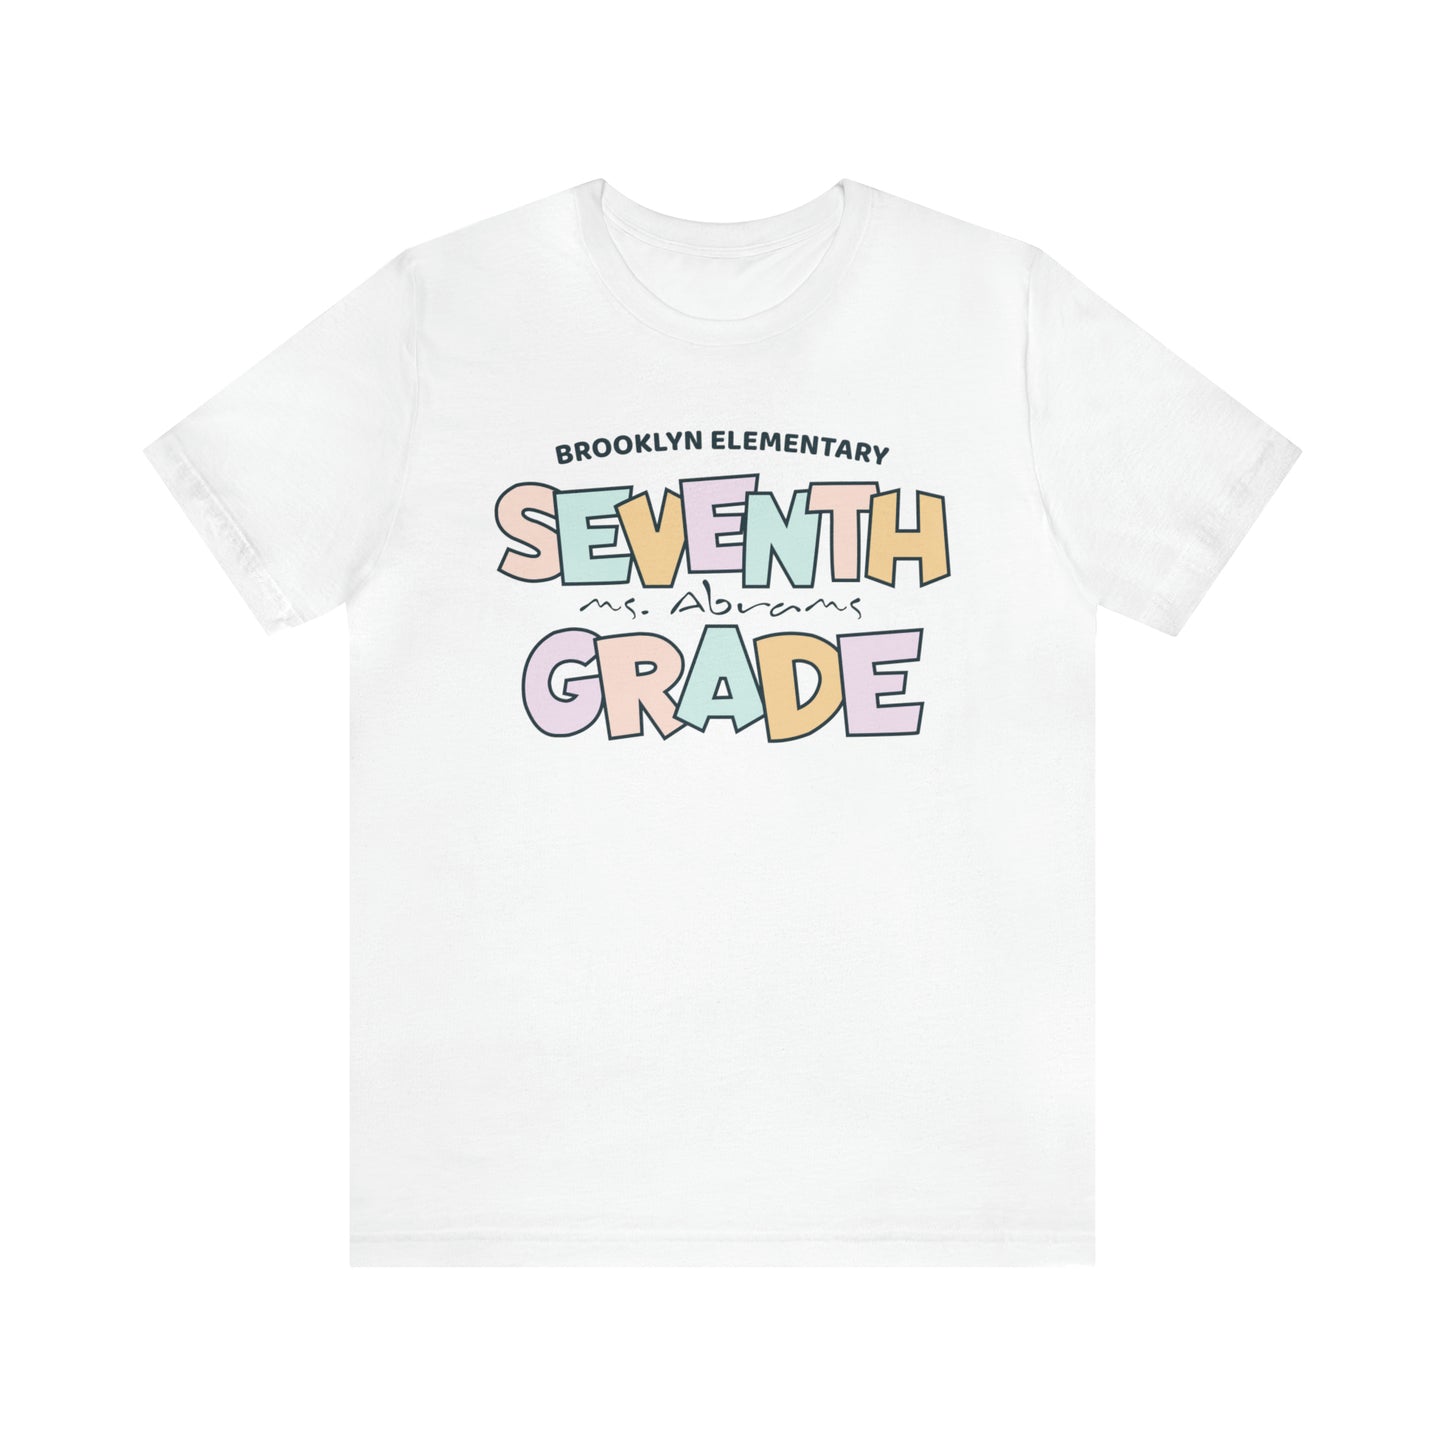 Seventh Grade Shirt, Personalized School and Teacher Name Shirt